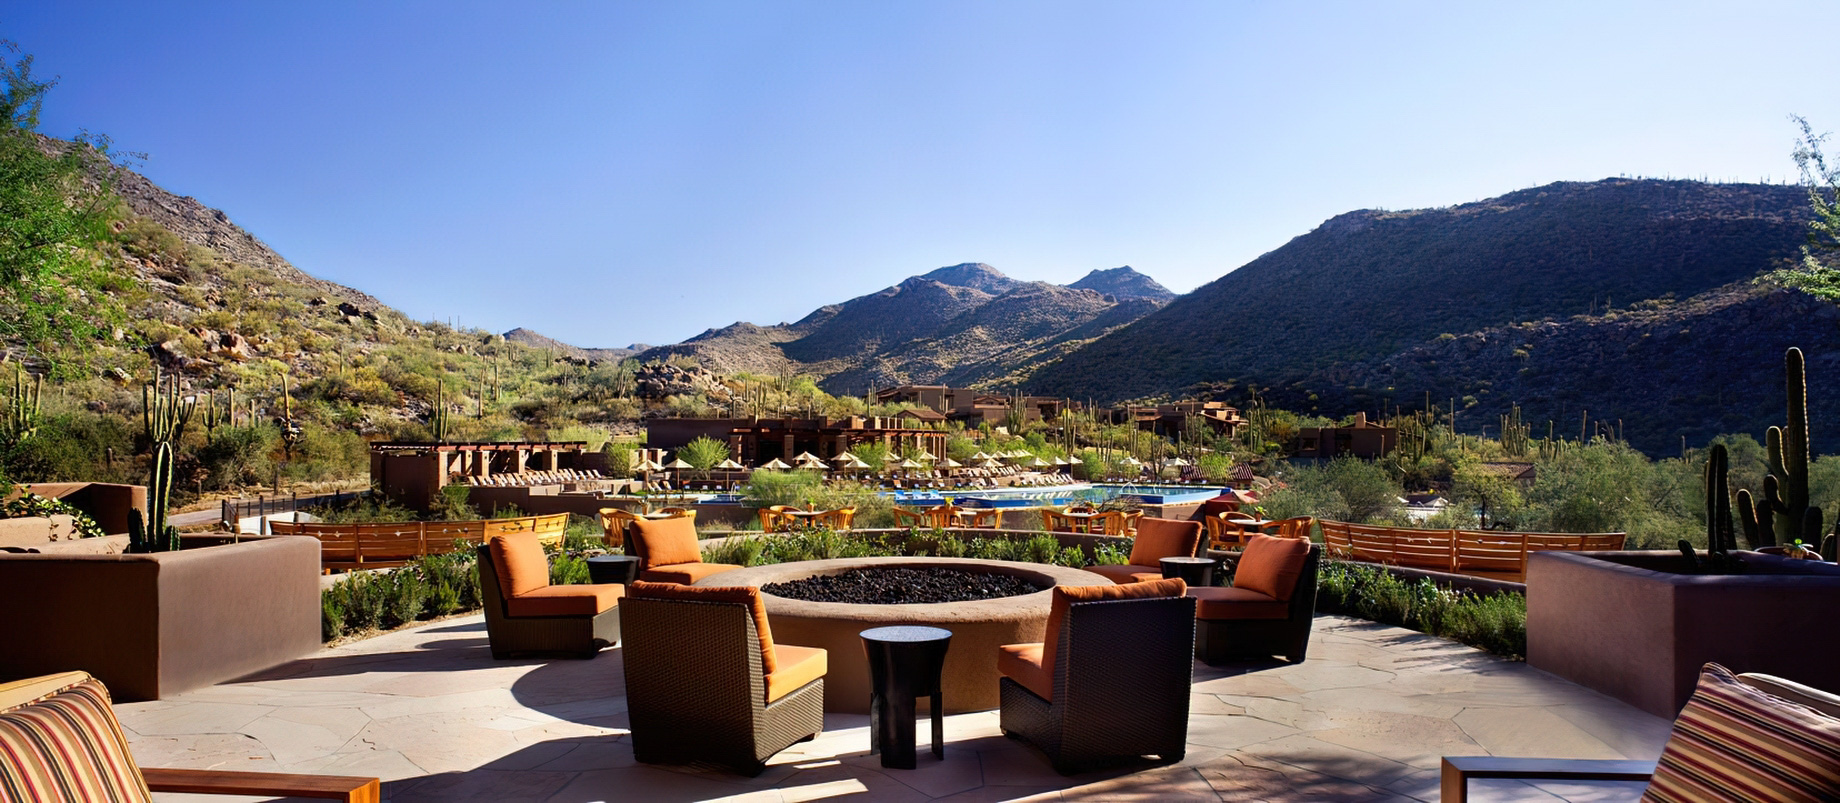 The Ritz-Carlton, Dove Mountain Resort - Marana, AZ, USA - Fire Pit Outdoor Lounge